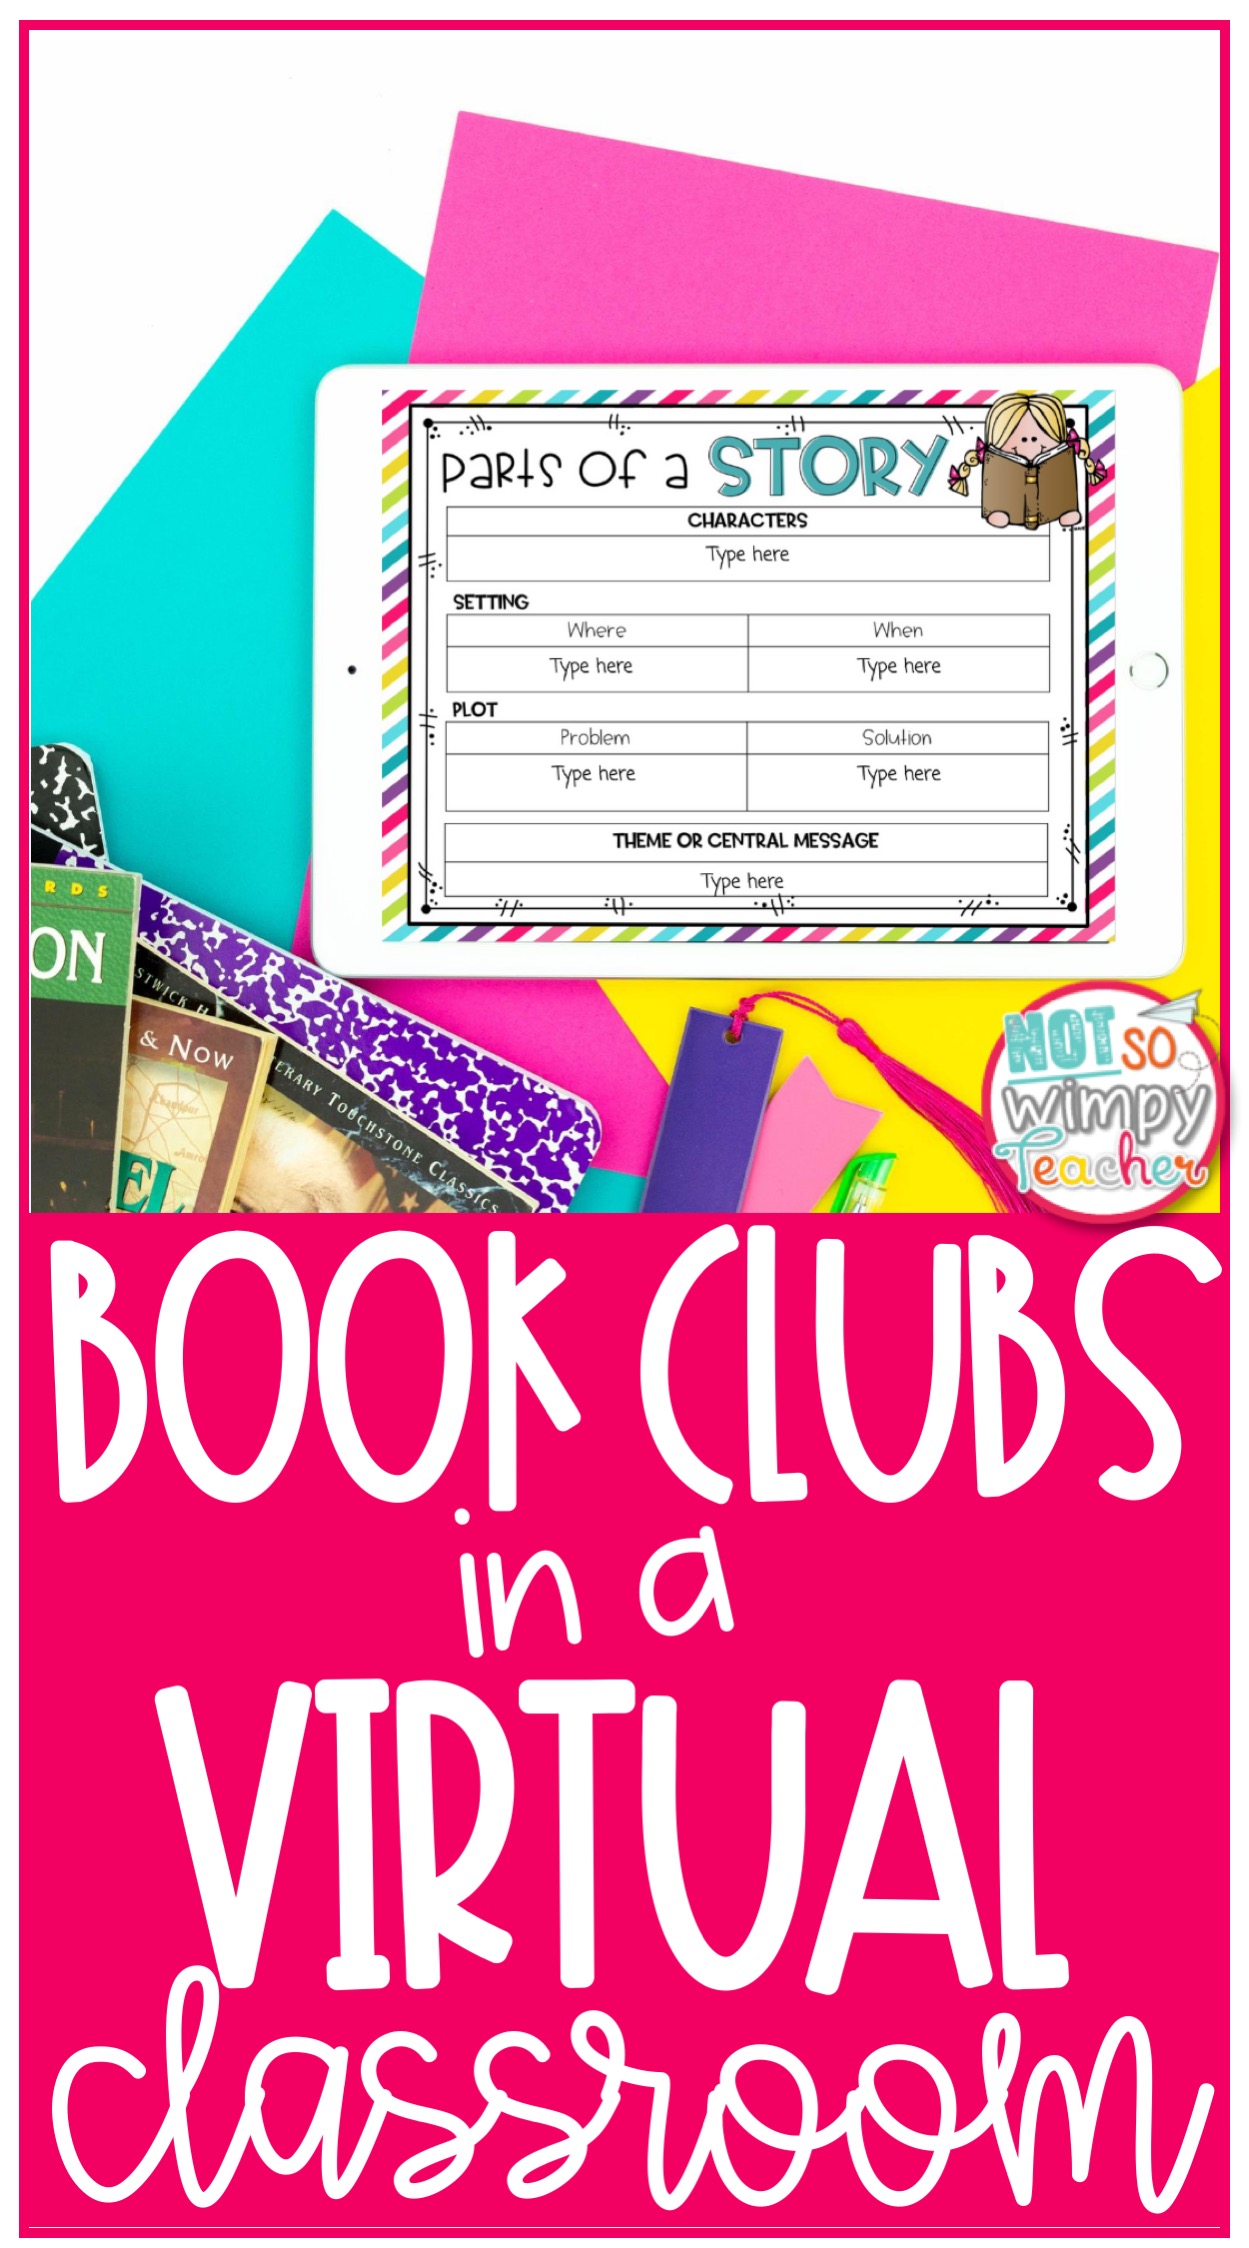 digital book club resource displayed on iPad